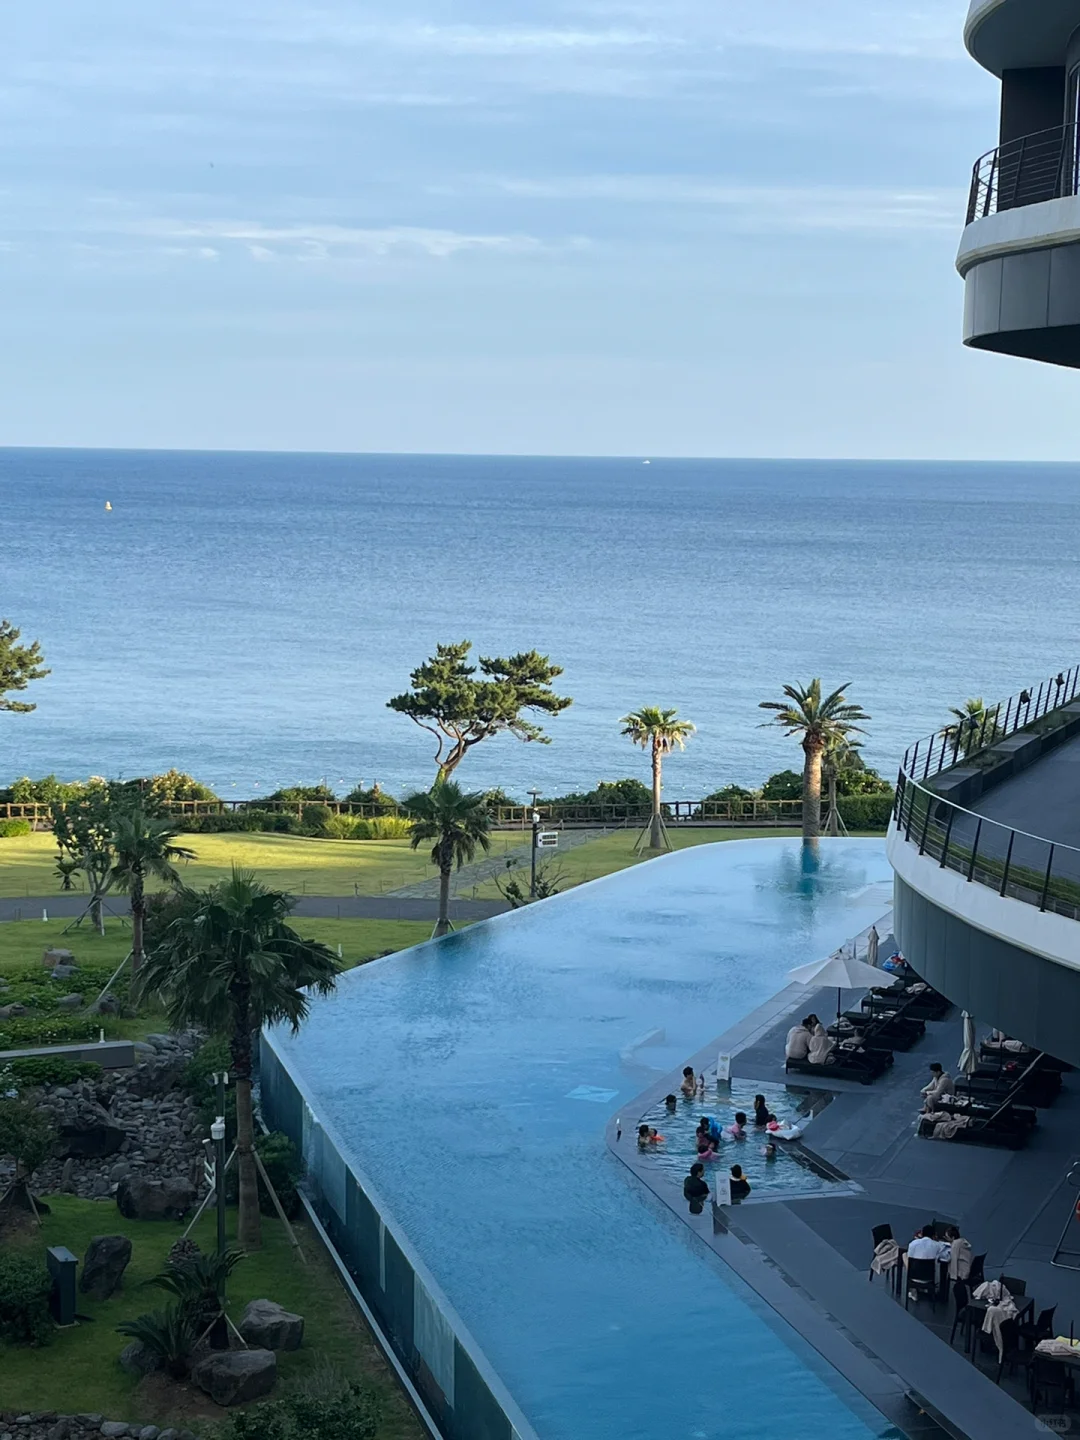 Busan/Jeju-🌴Parnas Hotel in Seogwipo, Jeju Island has an infinity pool by the sea